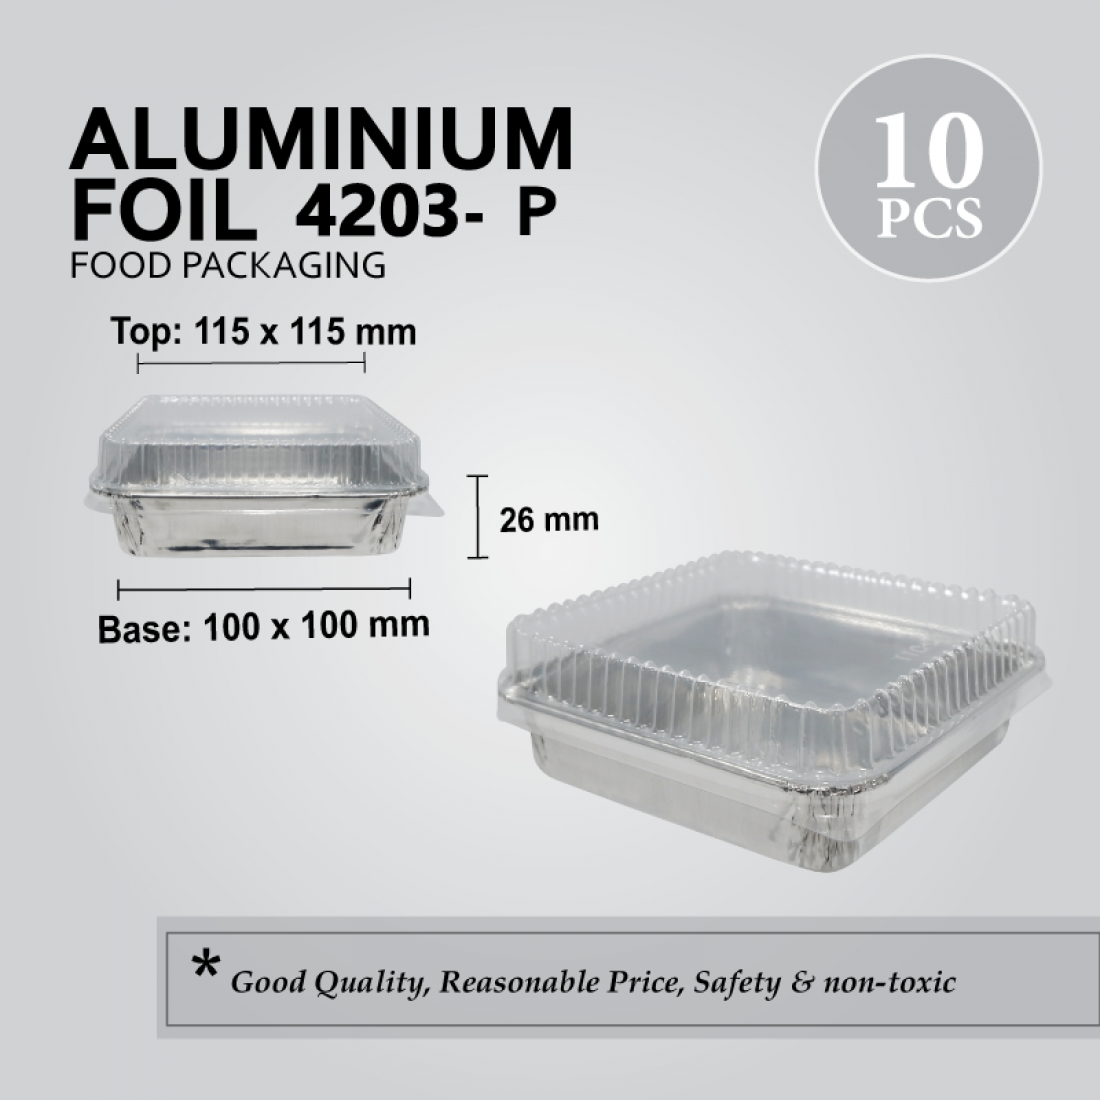 Half Size Aluminum Foil Pans: In Bulk at WebstaurantStore